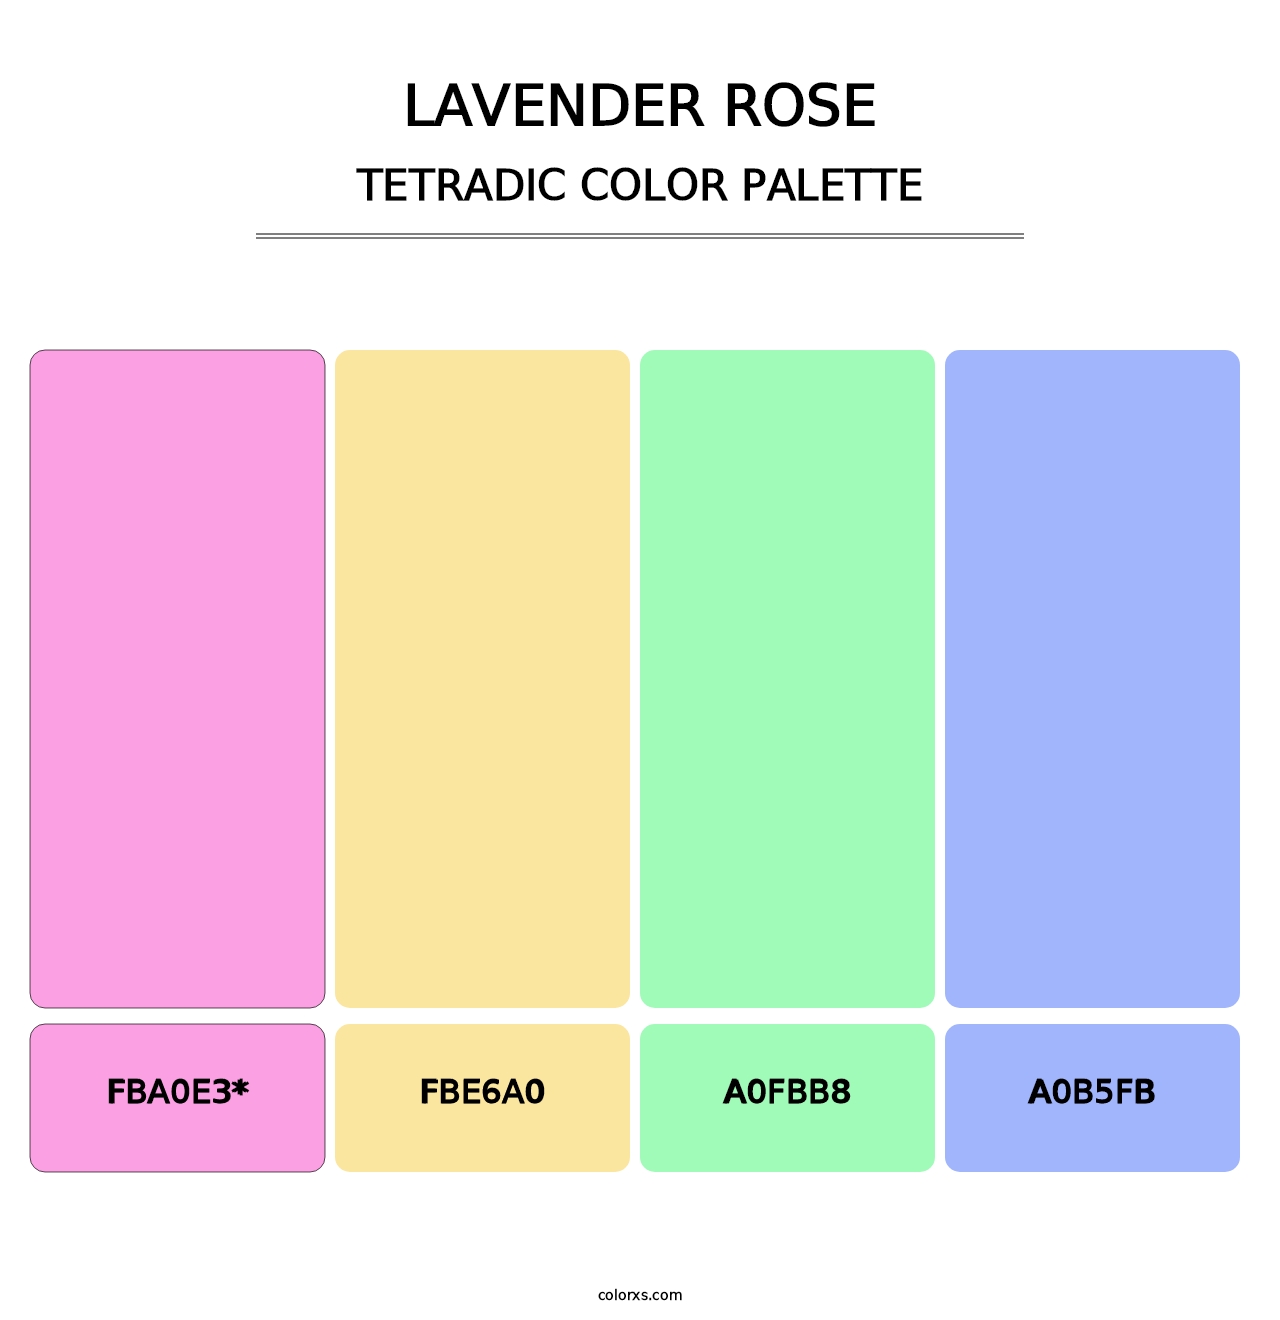 Lavender Rose - Tetradic Color Palette